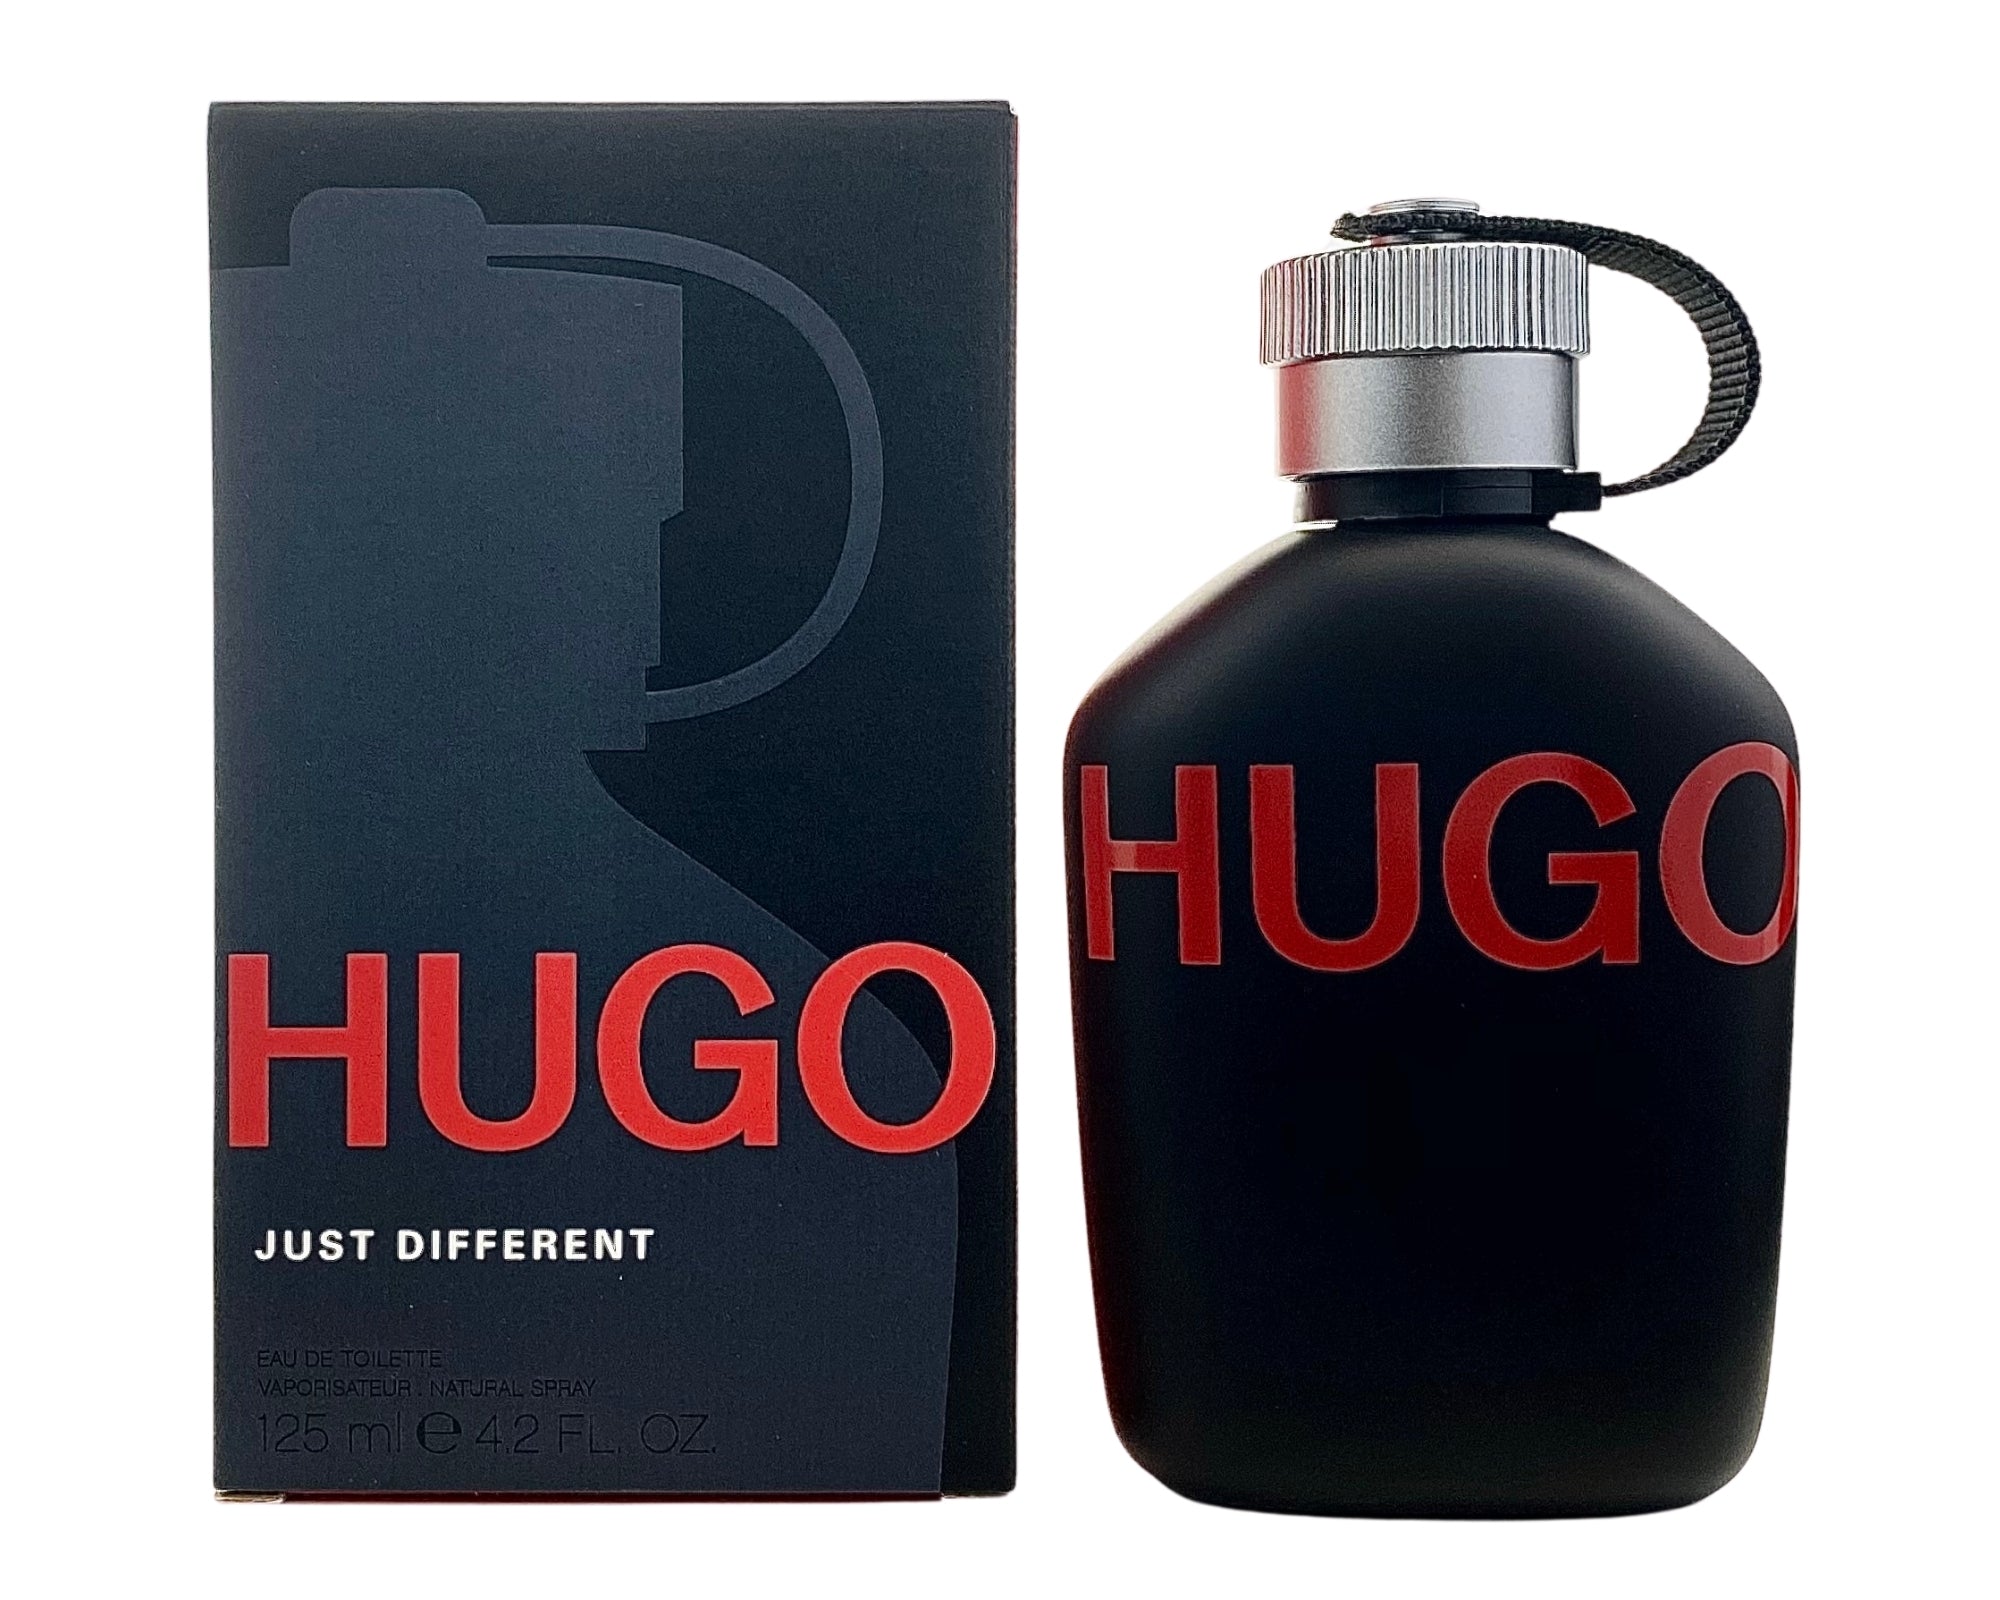 Hugo just different. Hugo Boss just different EDT 40 ml. Hugo Boss Hugo just different. Hugo Boss "Hugo just different" EDT, 100ml. Hugo Boss just different 125 мл.